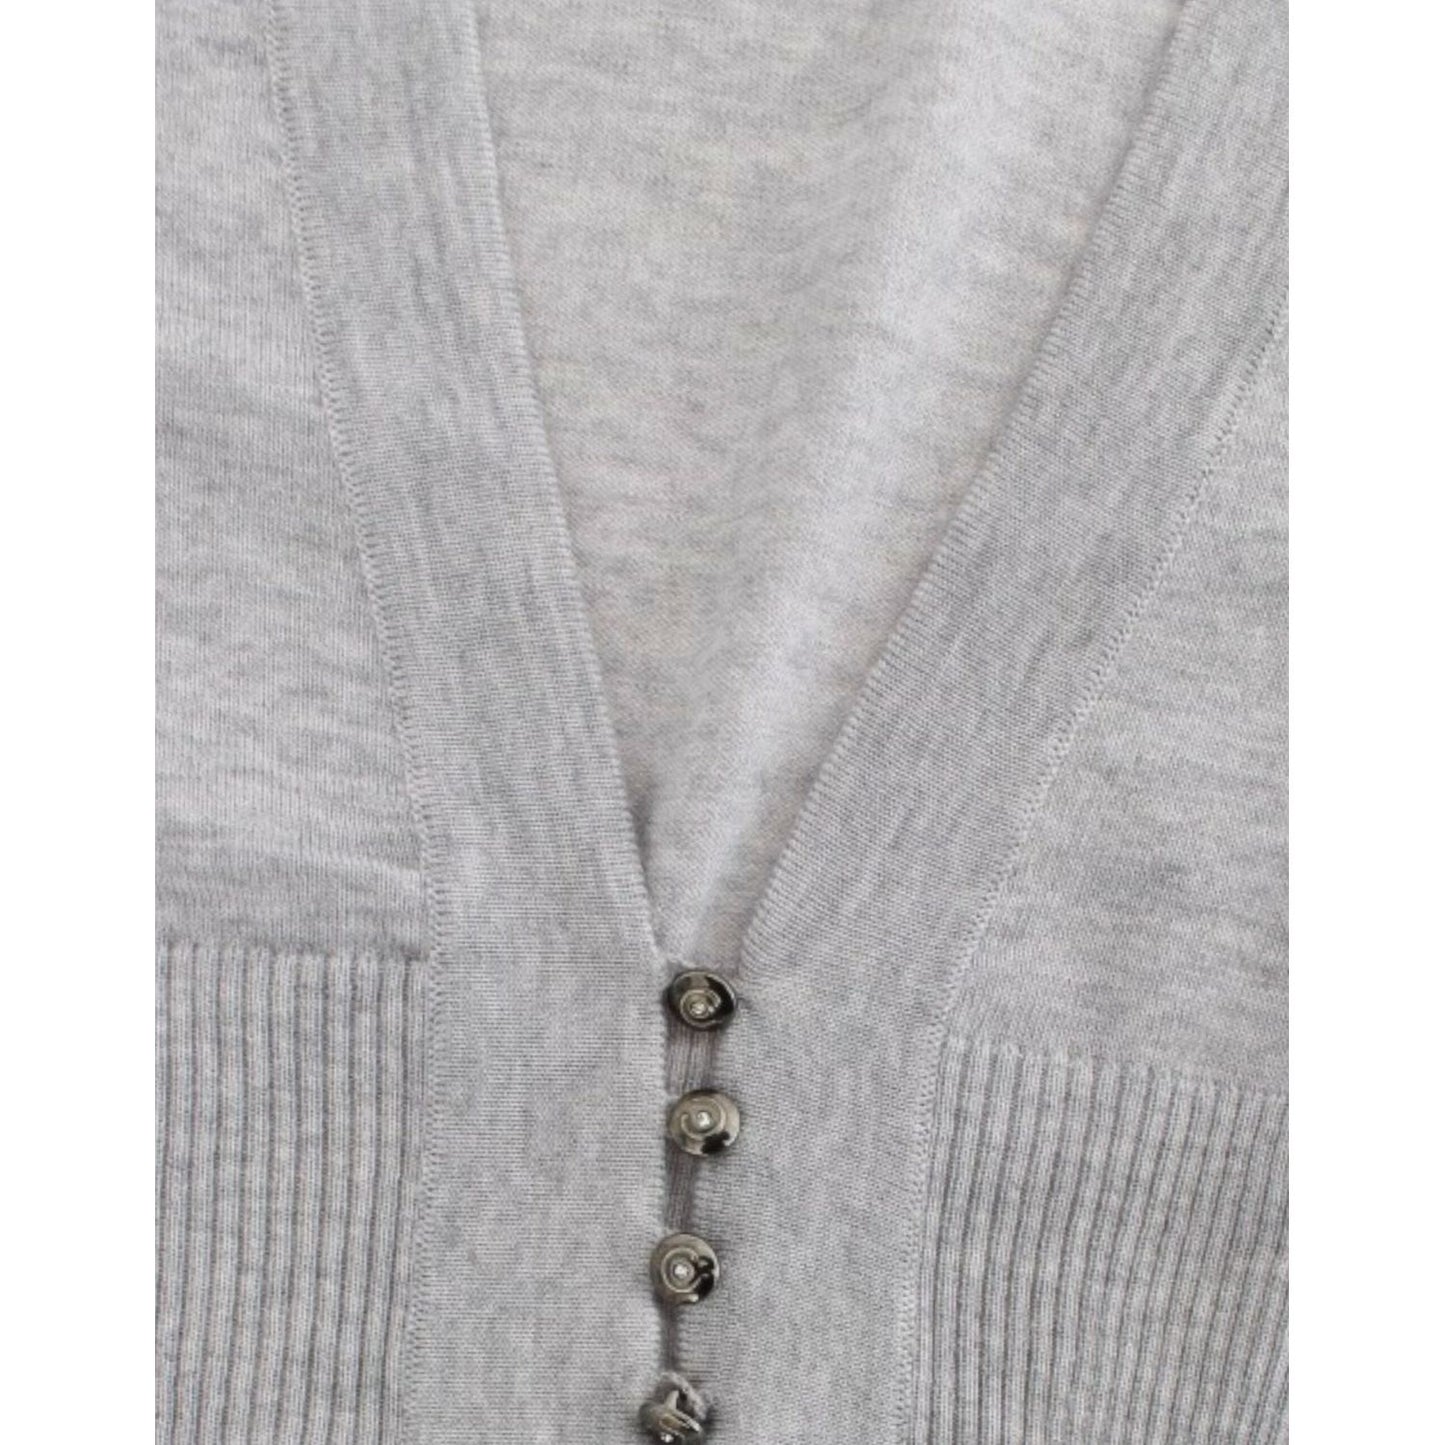 Cavalli Cropped Virgin Wool Cardigan in Chic Gray gray-cropped-wool-cardigan 8955-gray-cropped-wool-cardigan-5-1-scaled-63bf62d1-446.jpg